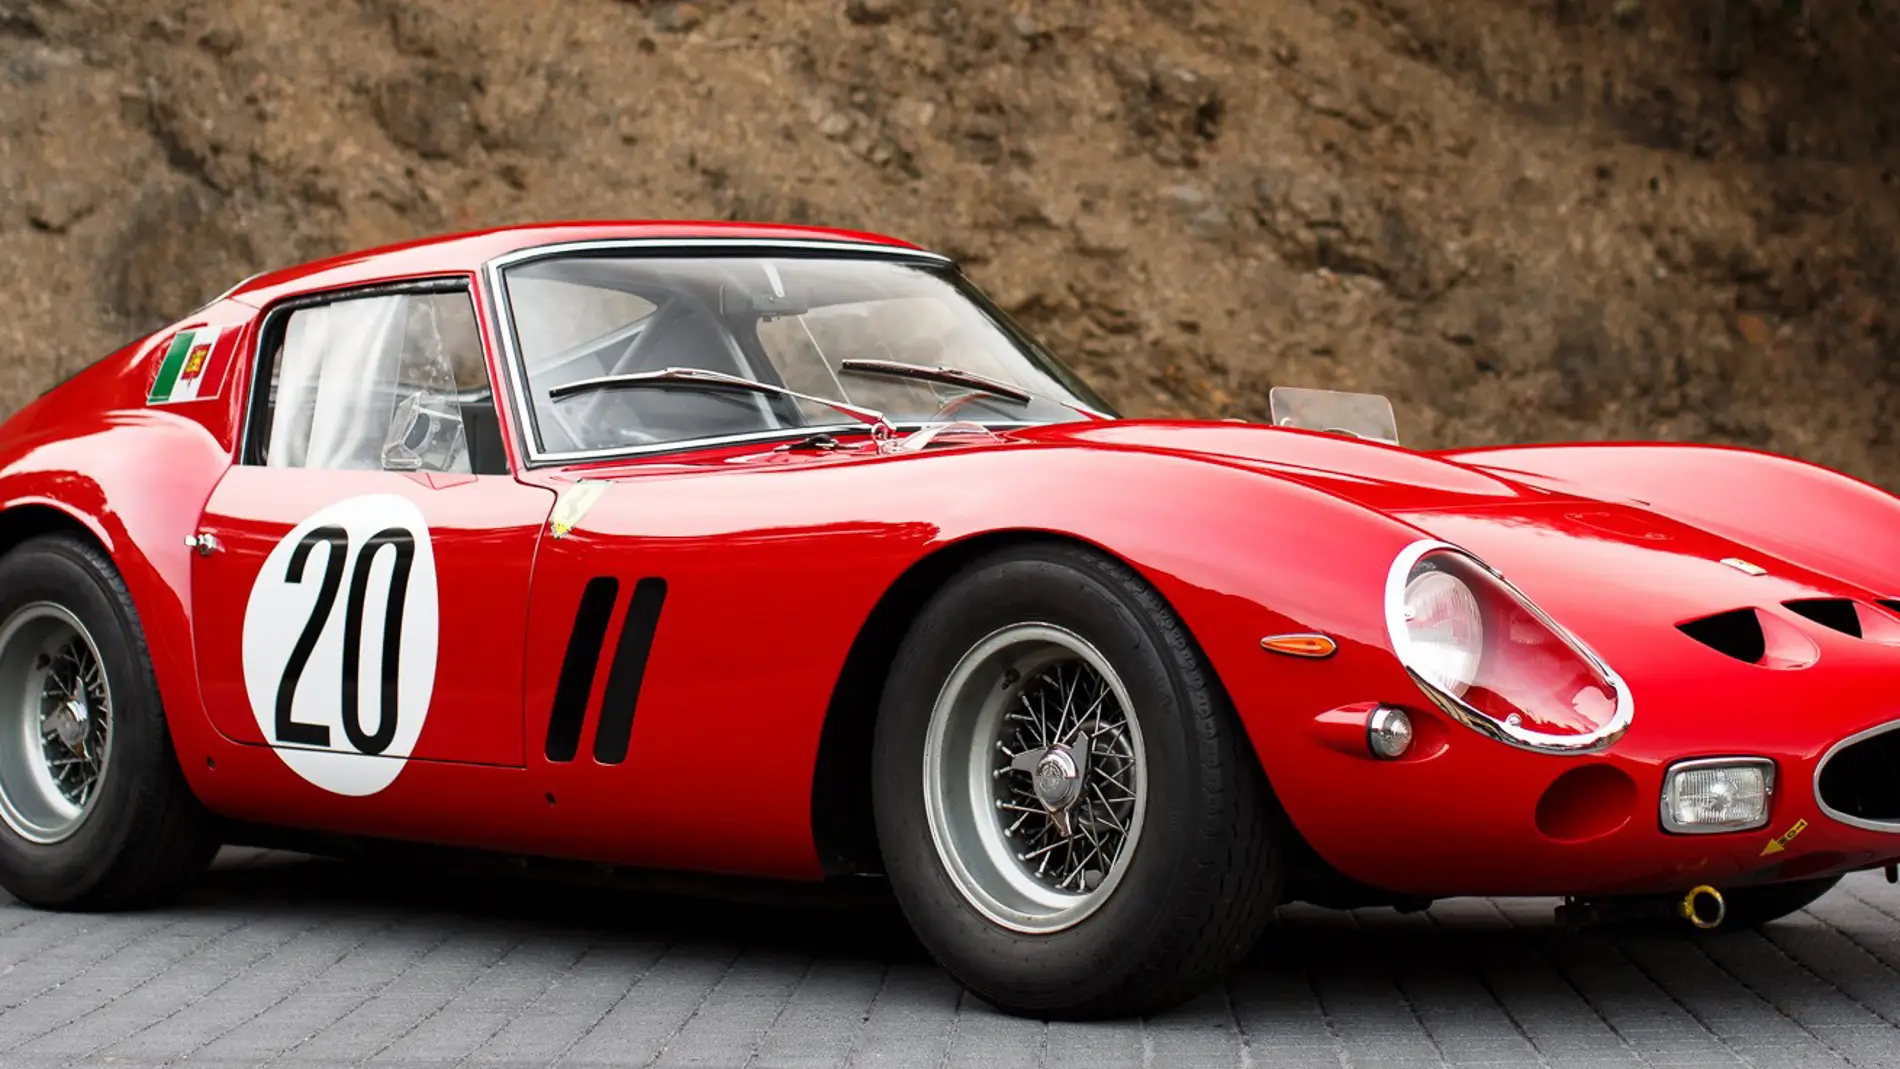 70-aniversario-Ferrari1.jpg